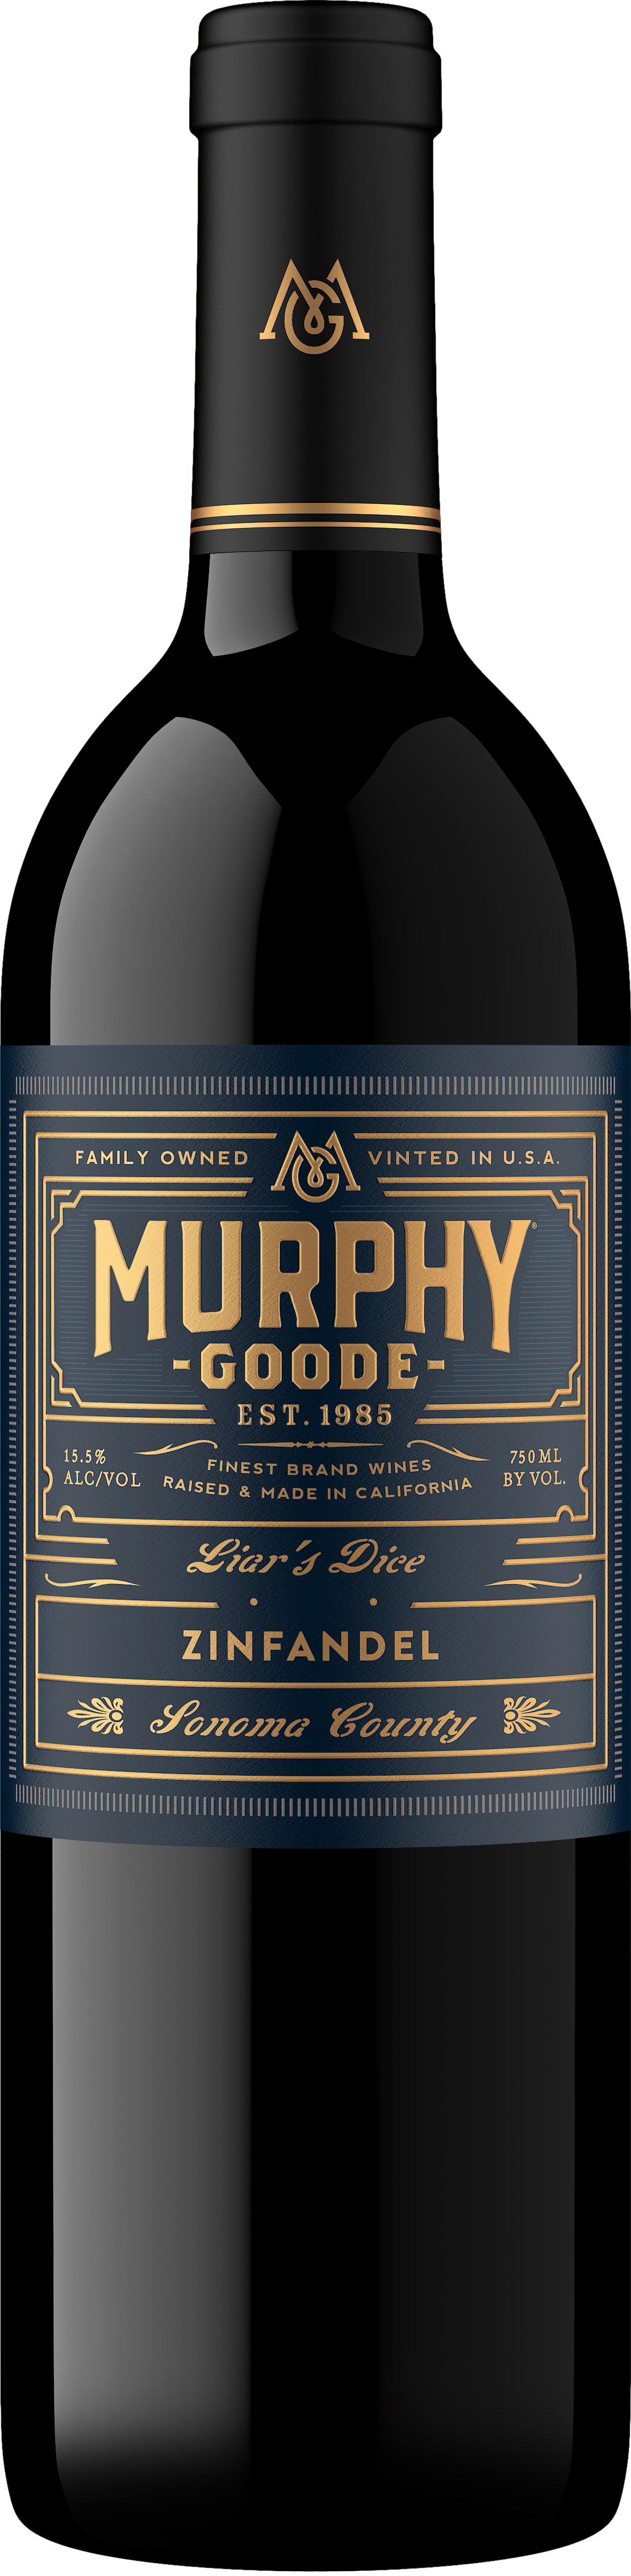 Murphy Goode Liar%27s Dice Zinfandel 2016 Murphy Goode 8wines DACH